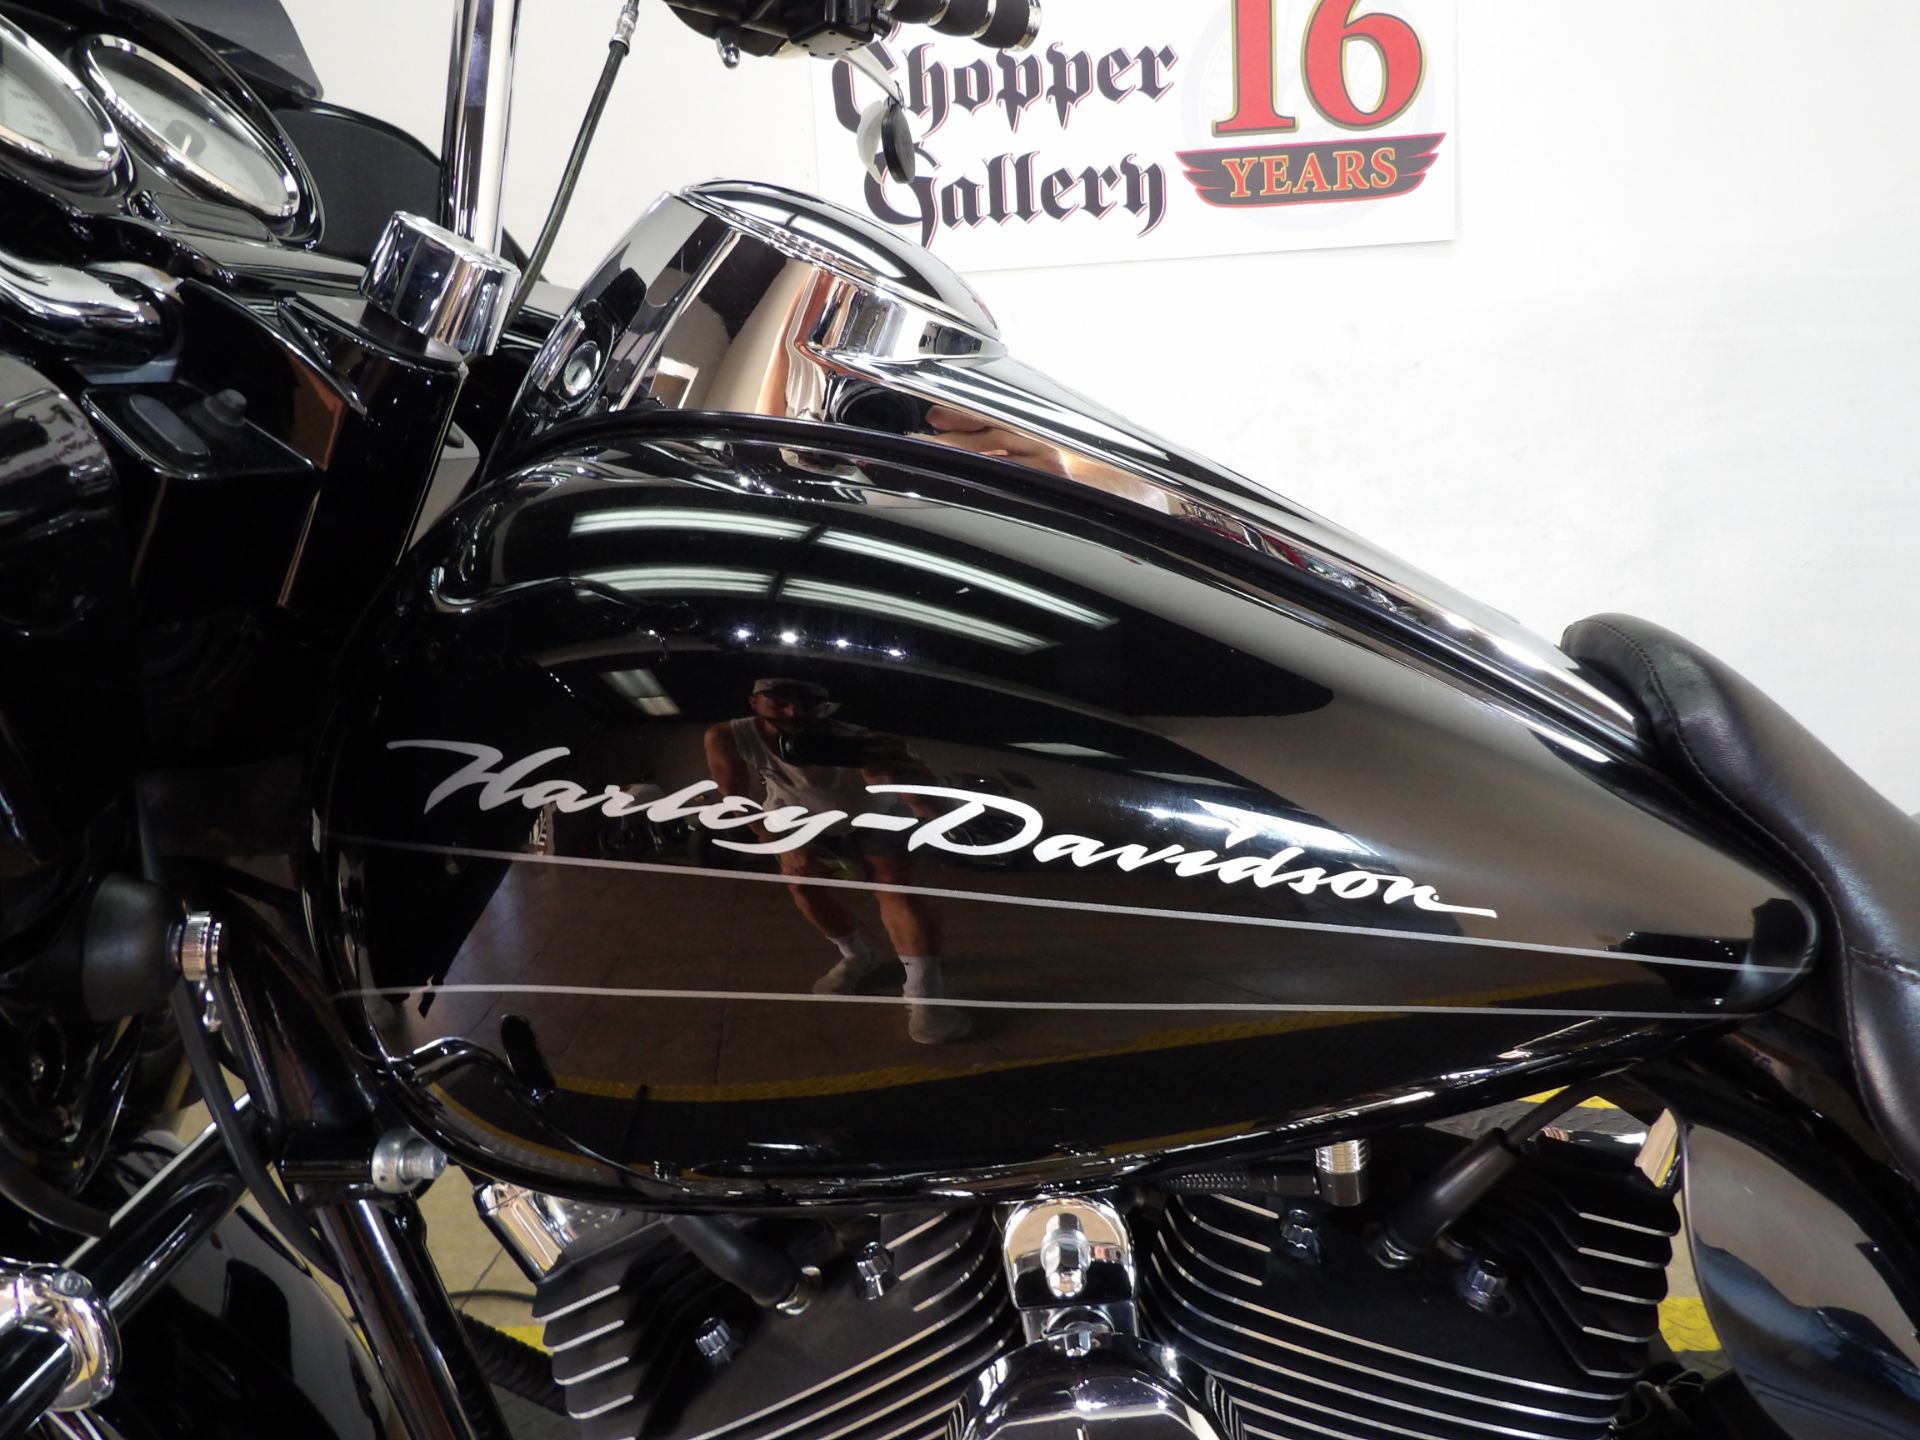 2013 Harley-Davidson Road Glide® Custom in Temecula, California - Photo 12